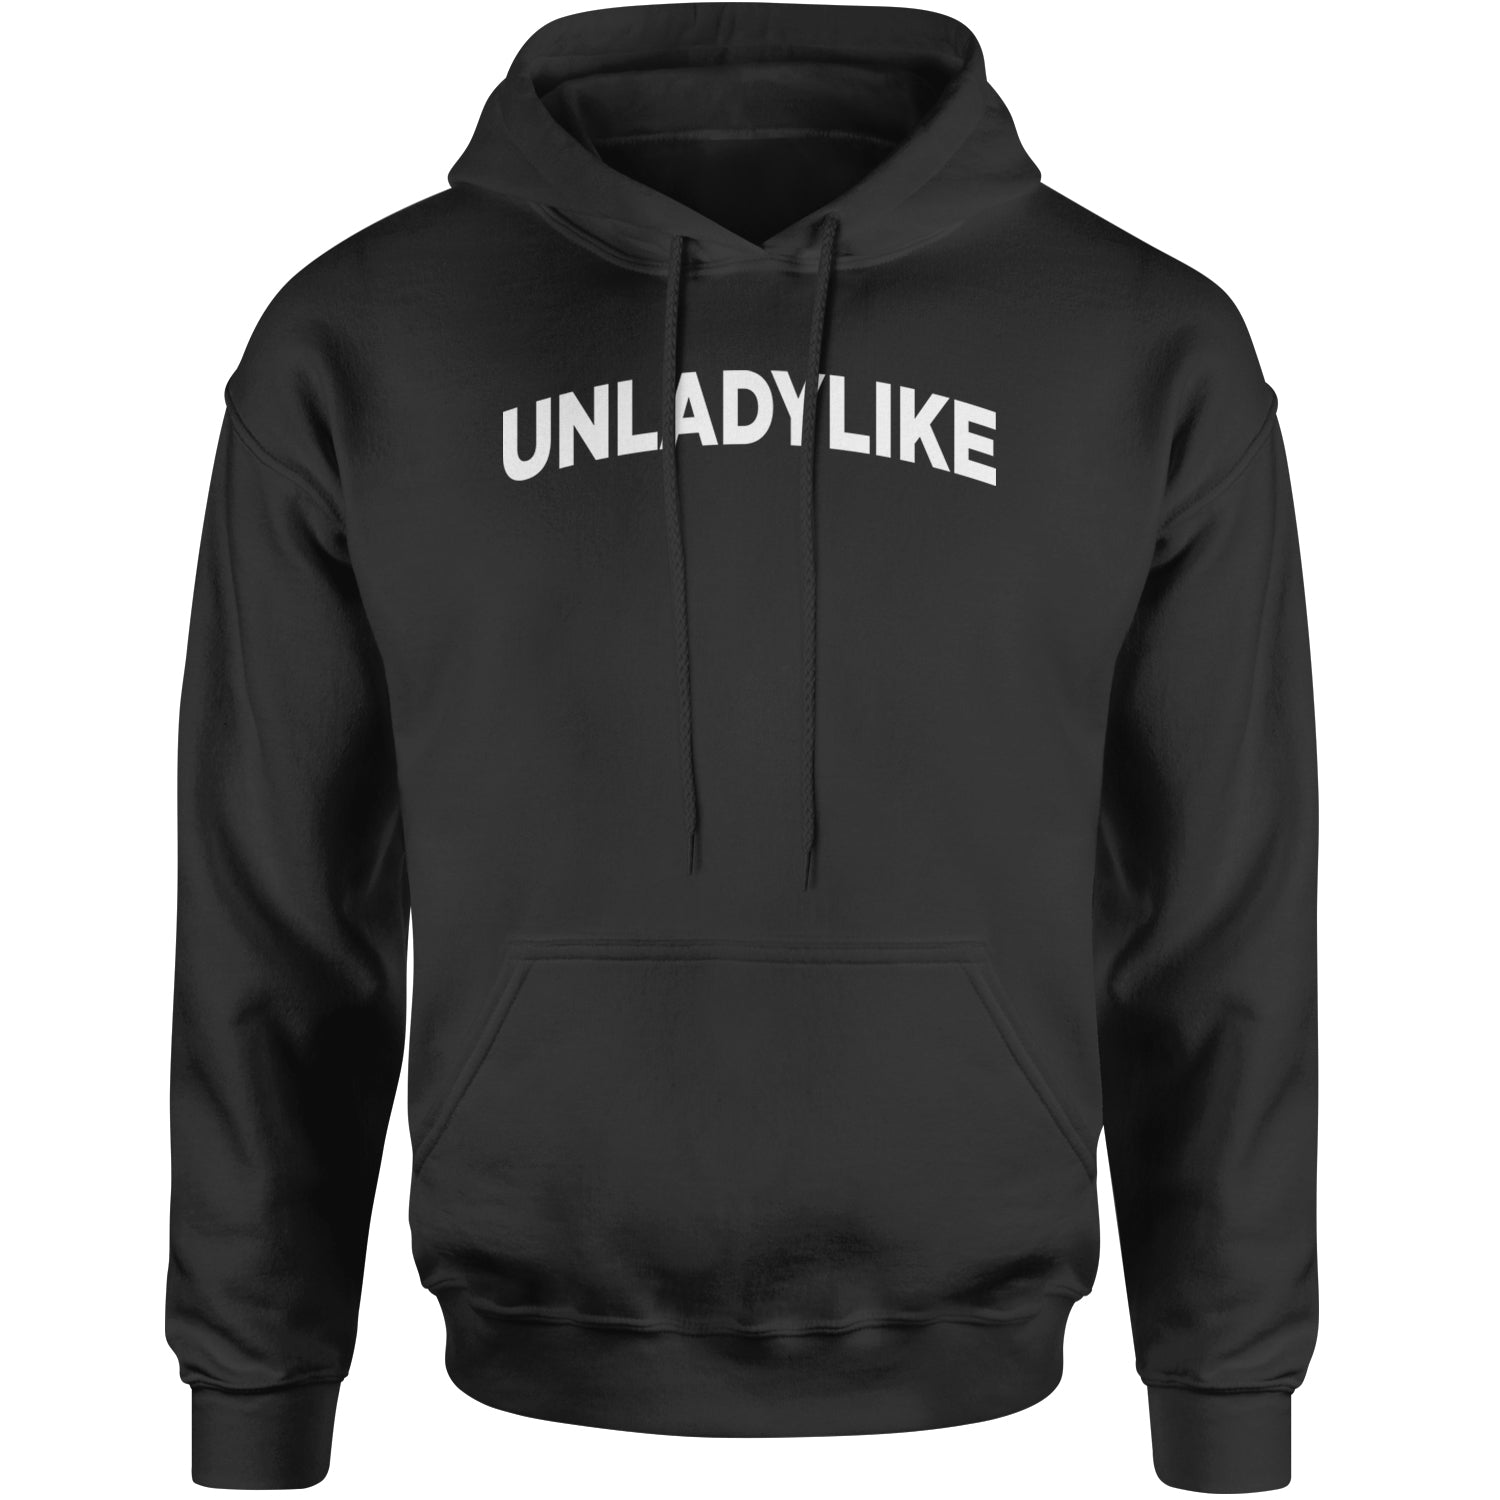 Unladylike Embrace Your Unique Strength Adult Hoodie Sweatshirt